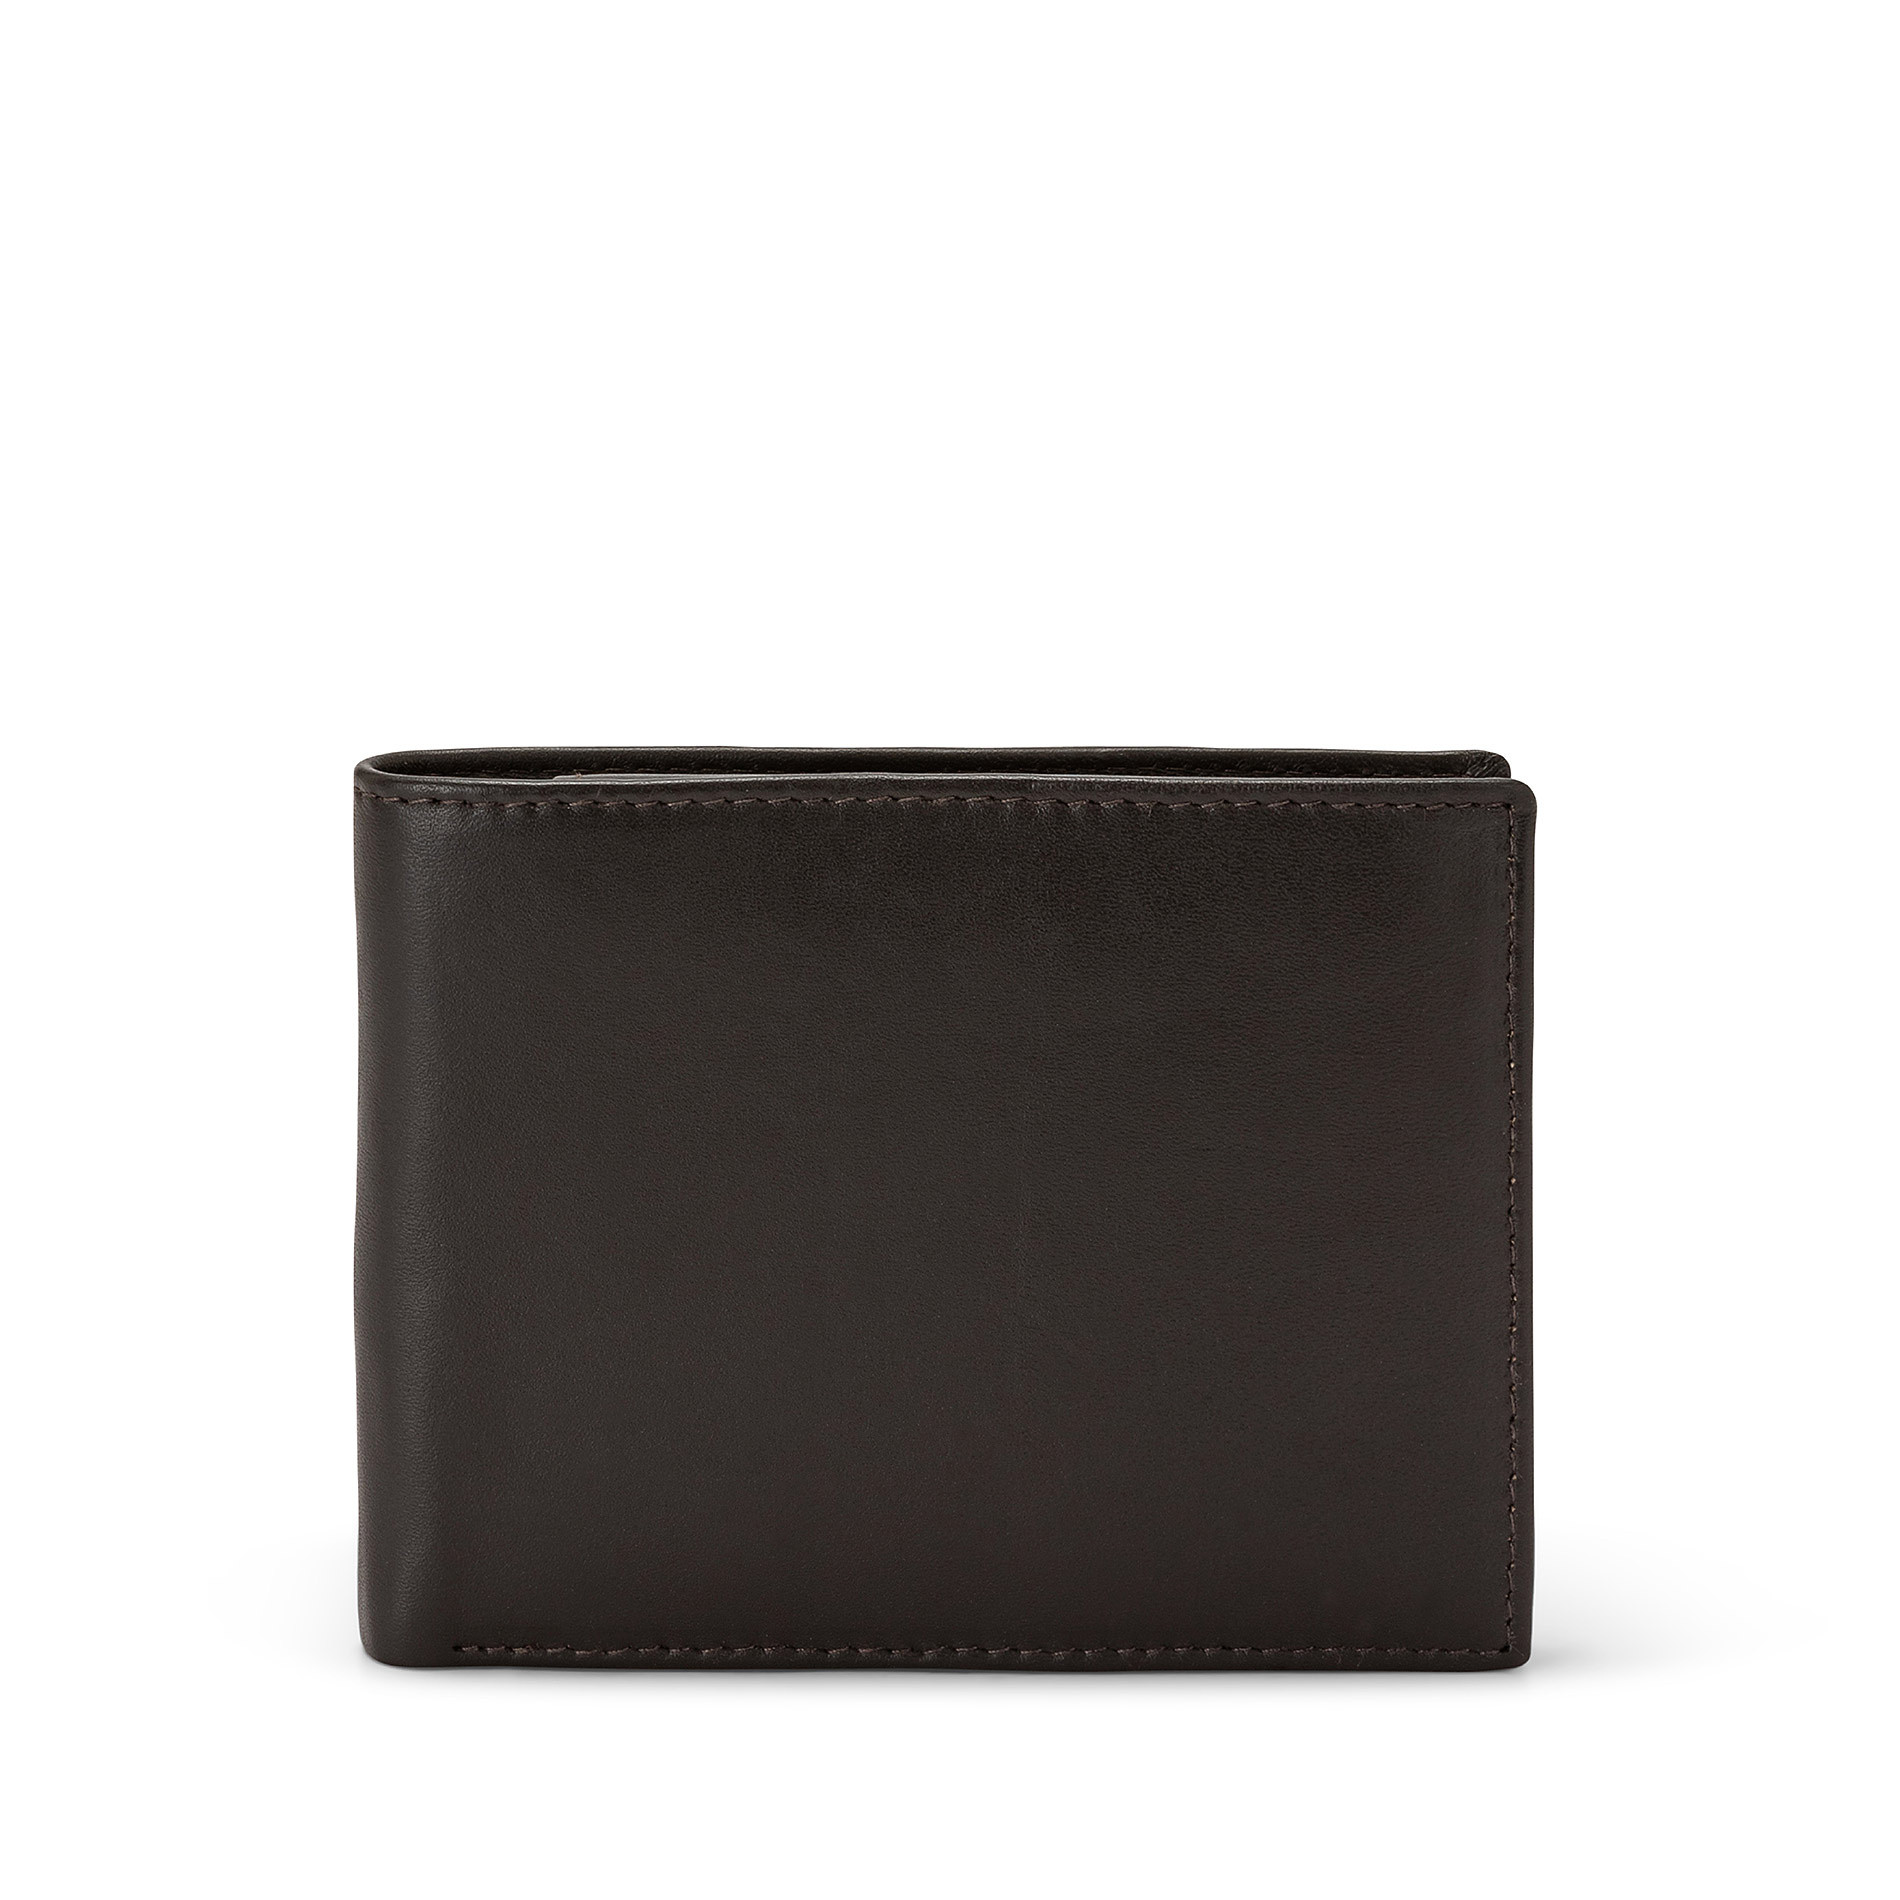 Luca D'Altieri leather wallet, Dark Brown, large image number 0